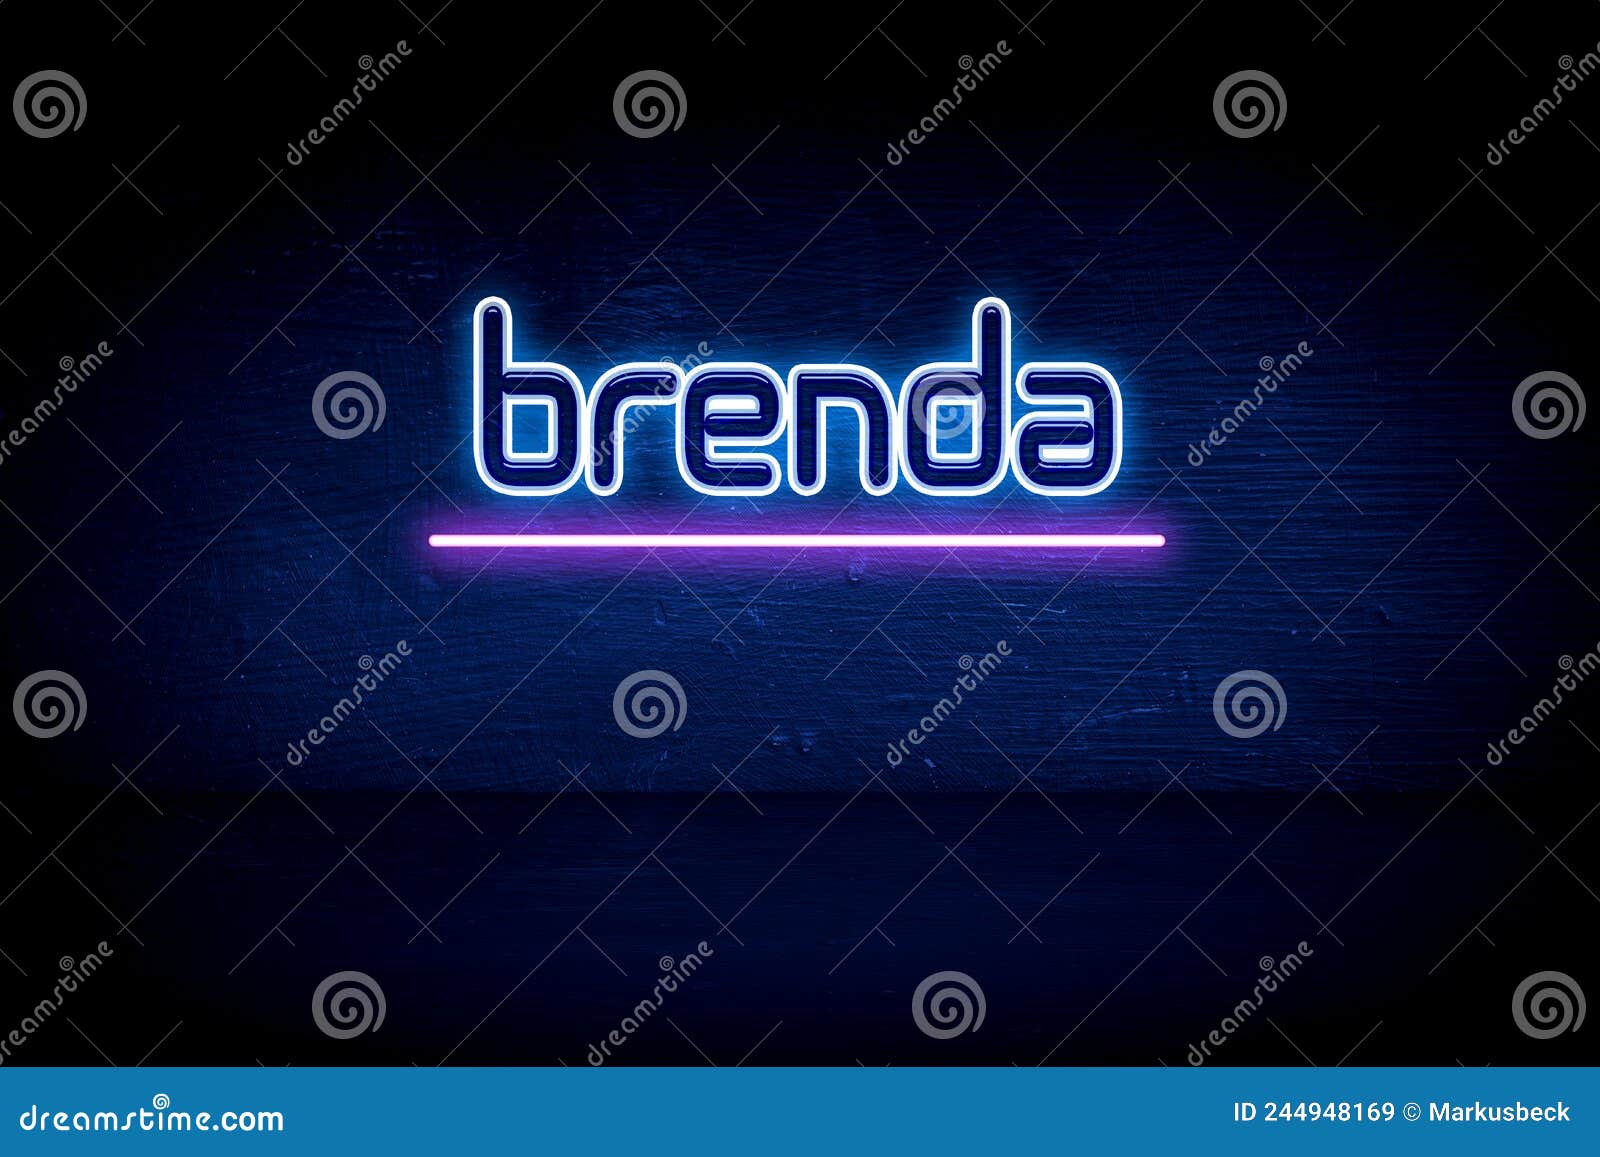 brenda - blue neon announcement signboard